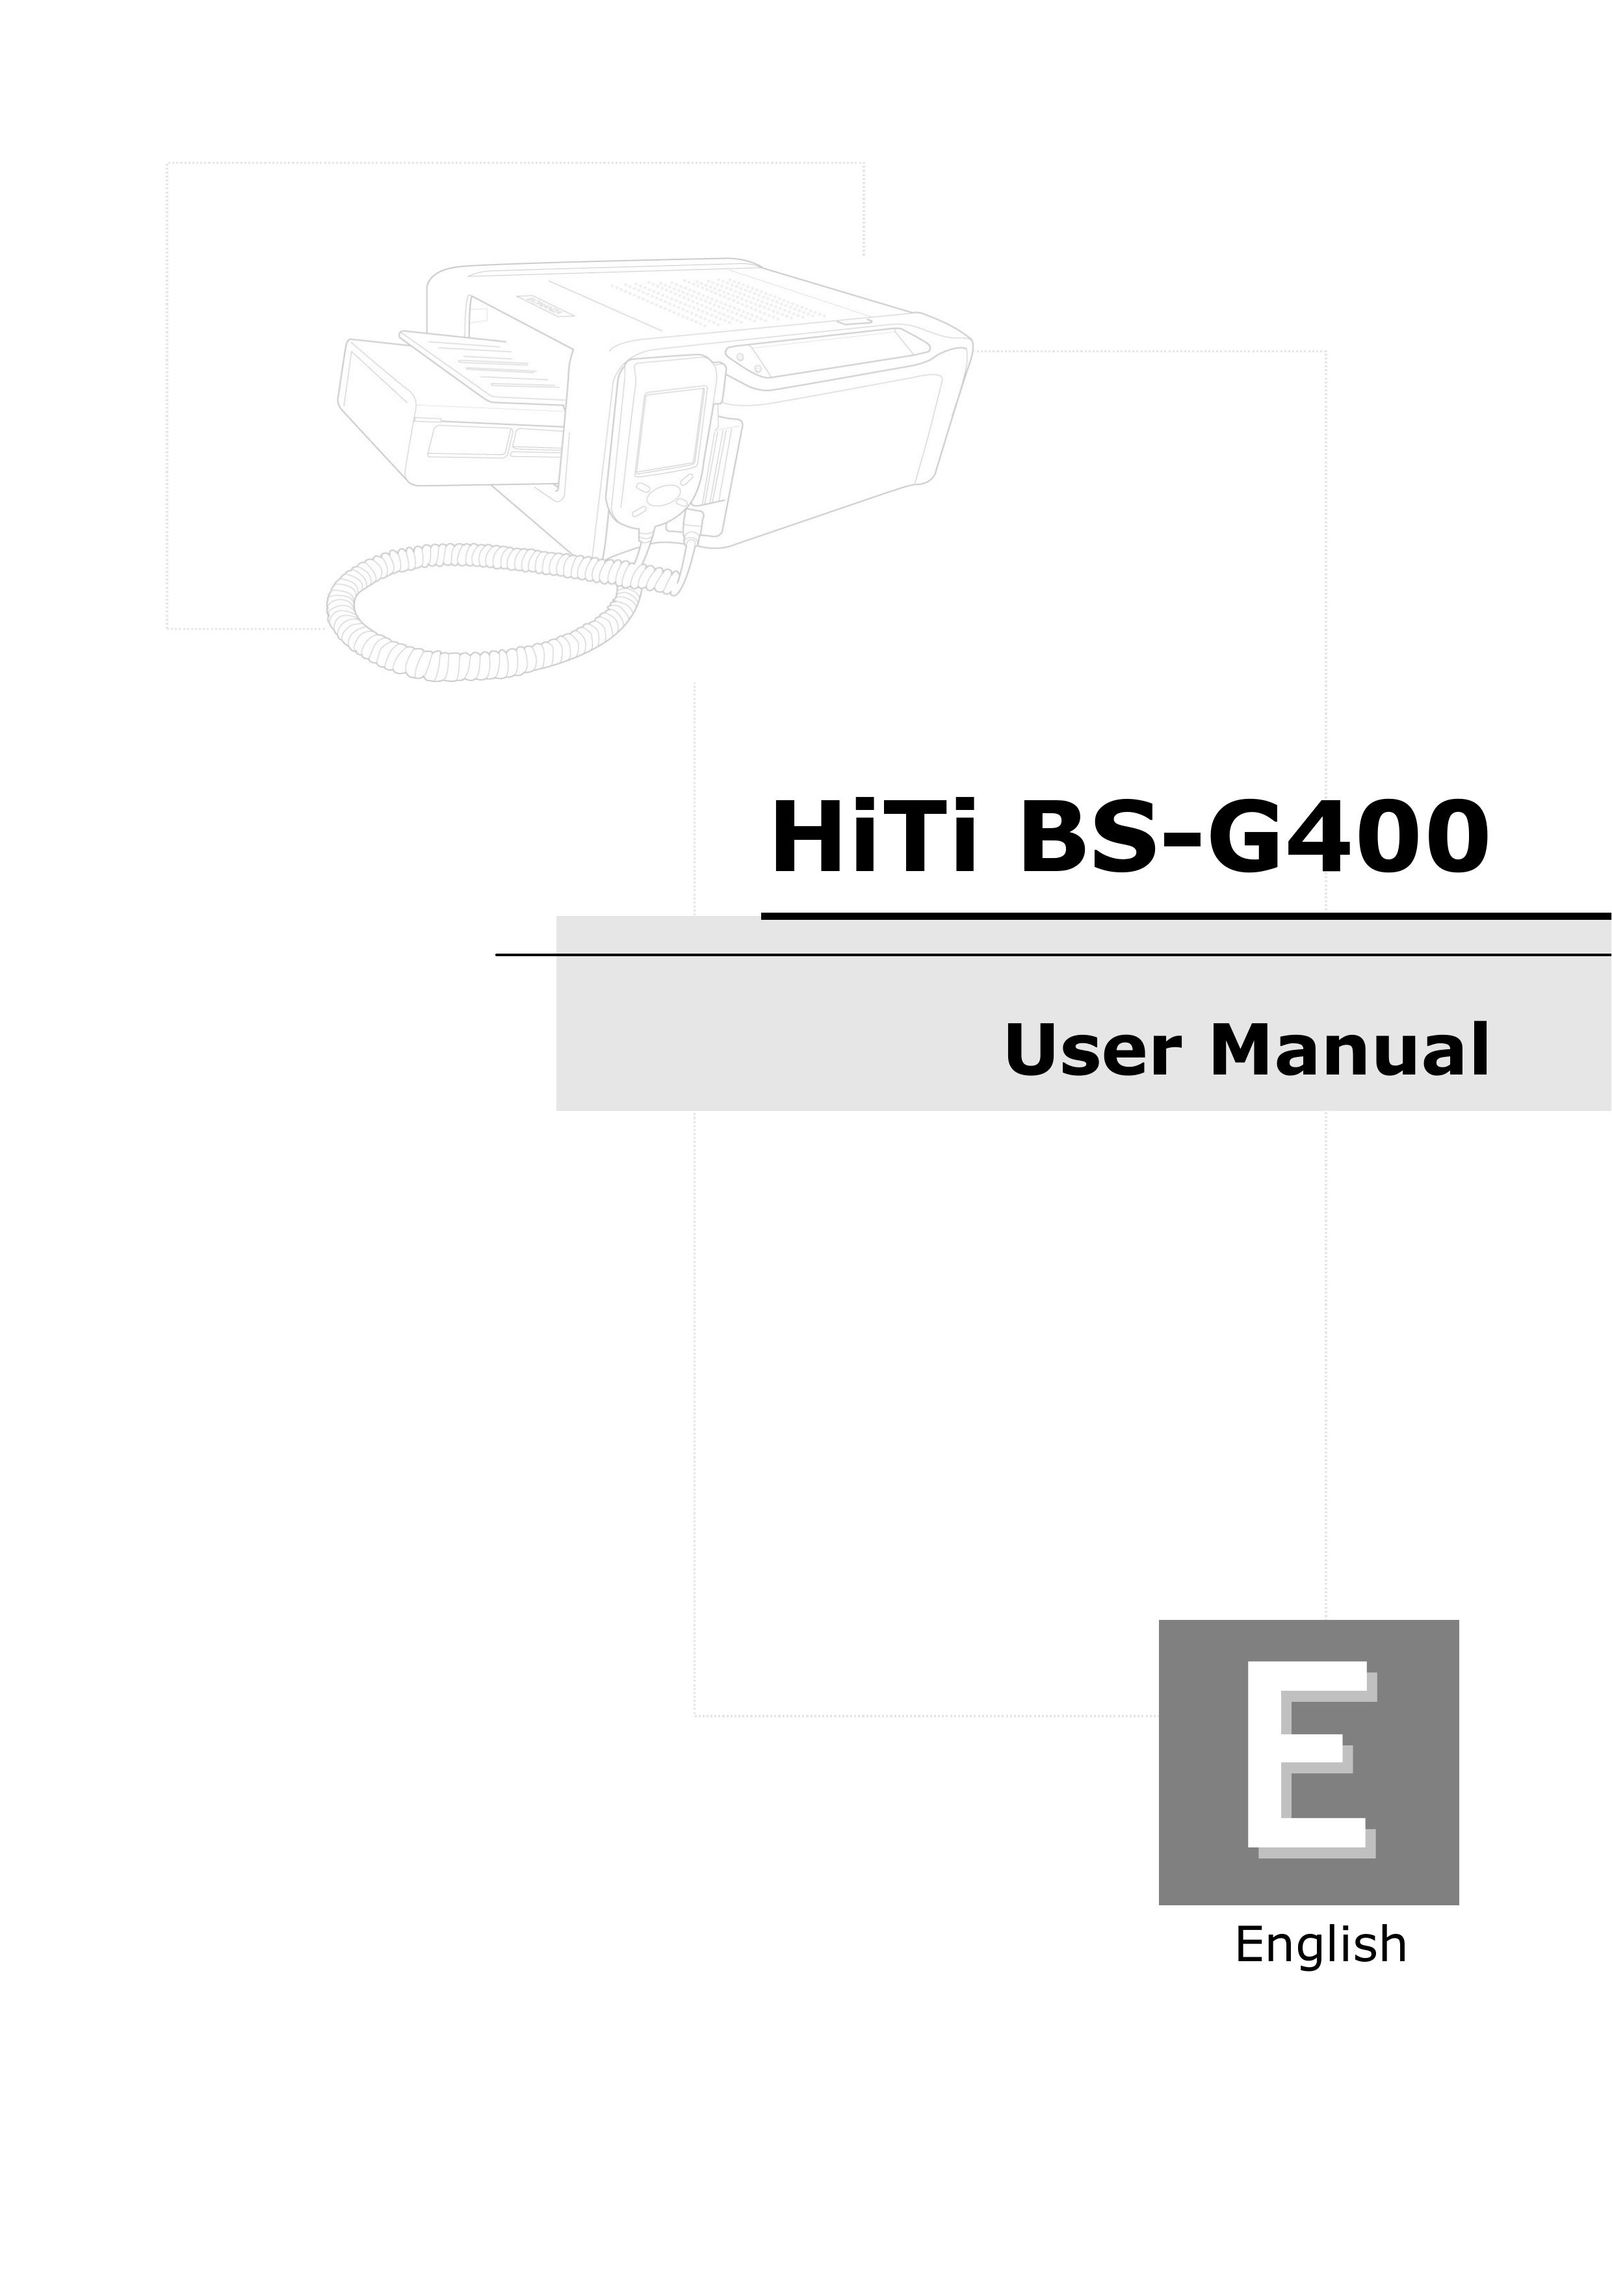 Hi-Touch Imaging Technologies BS-G400 Printer User Manual